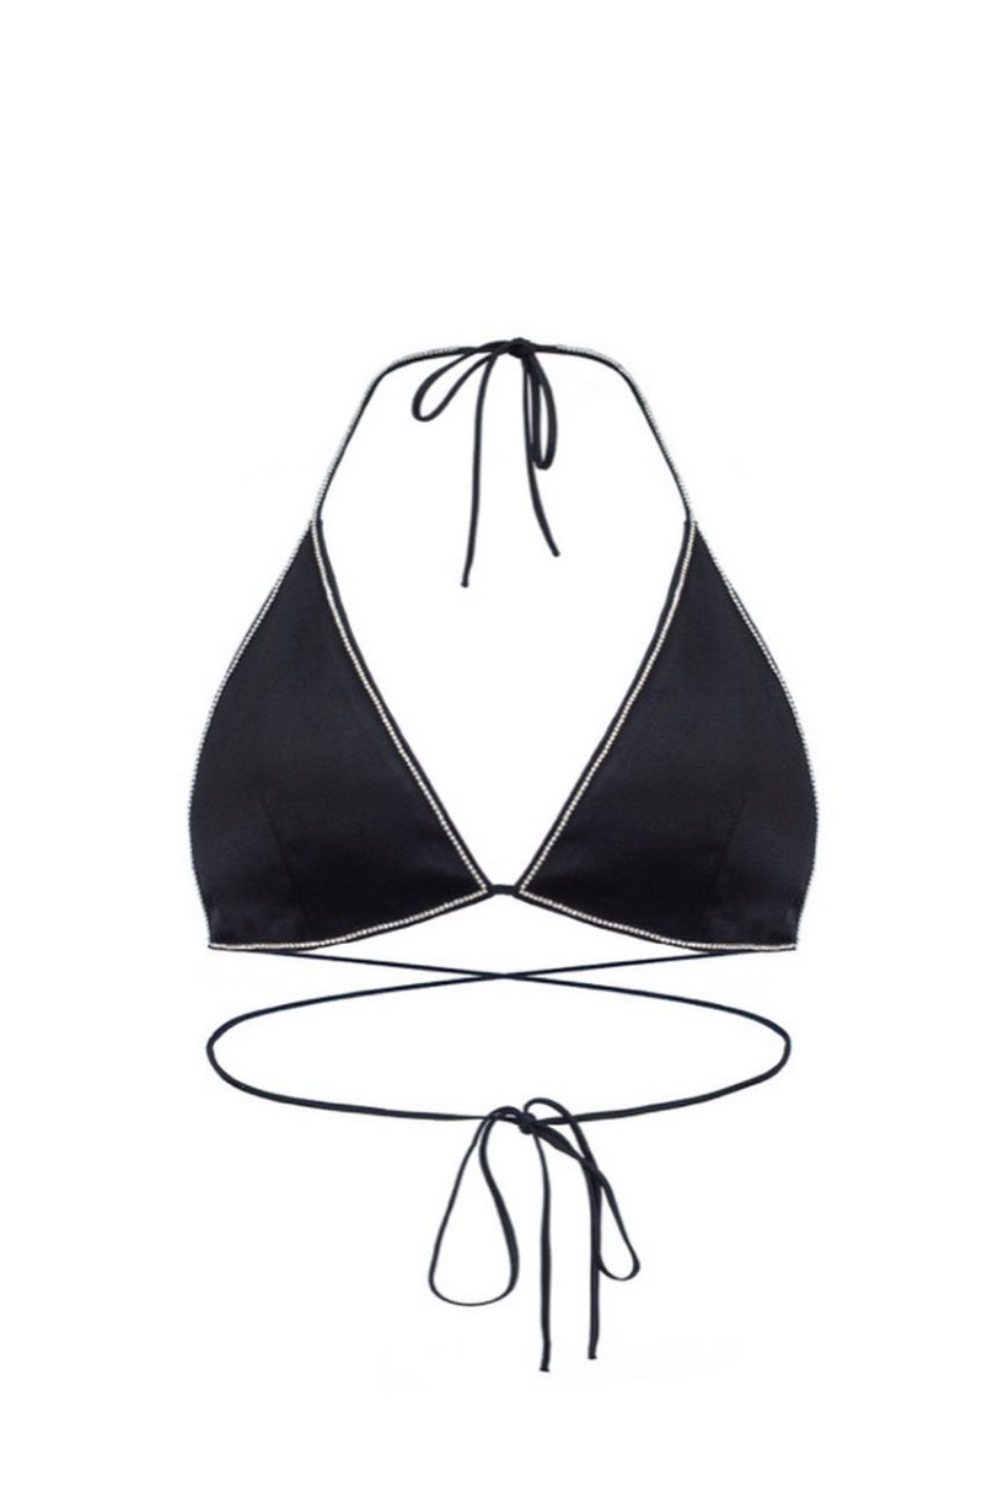 SATIN DIAMOND bra, black, One size, (Corsis), 34-002